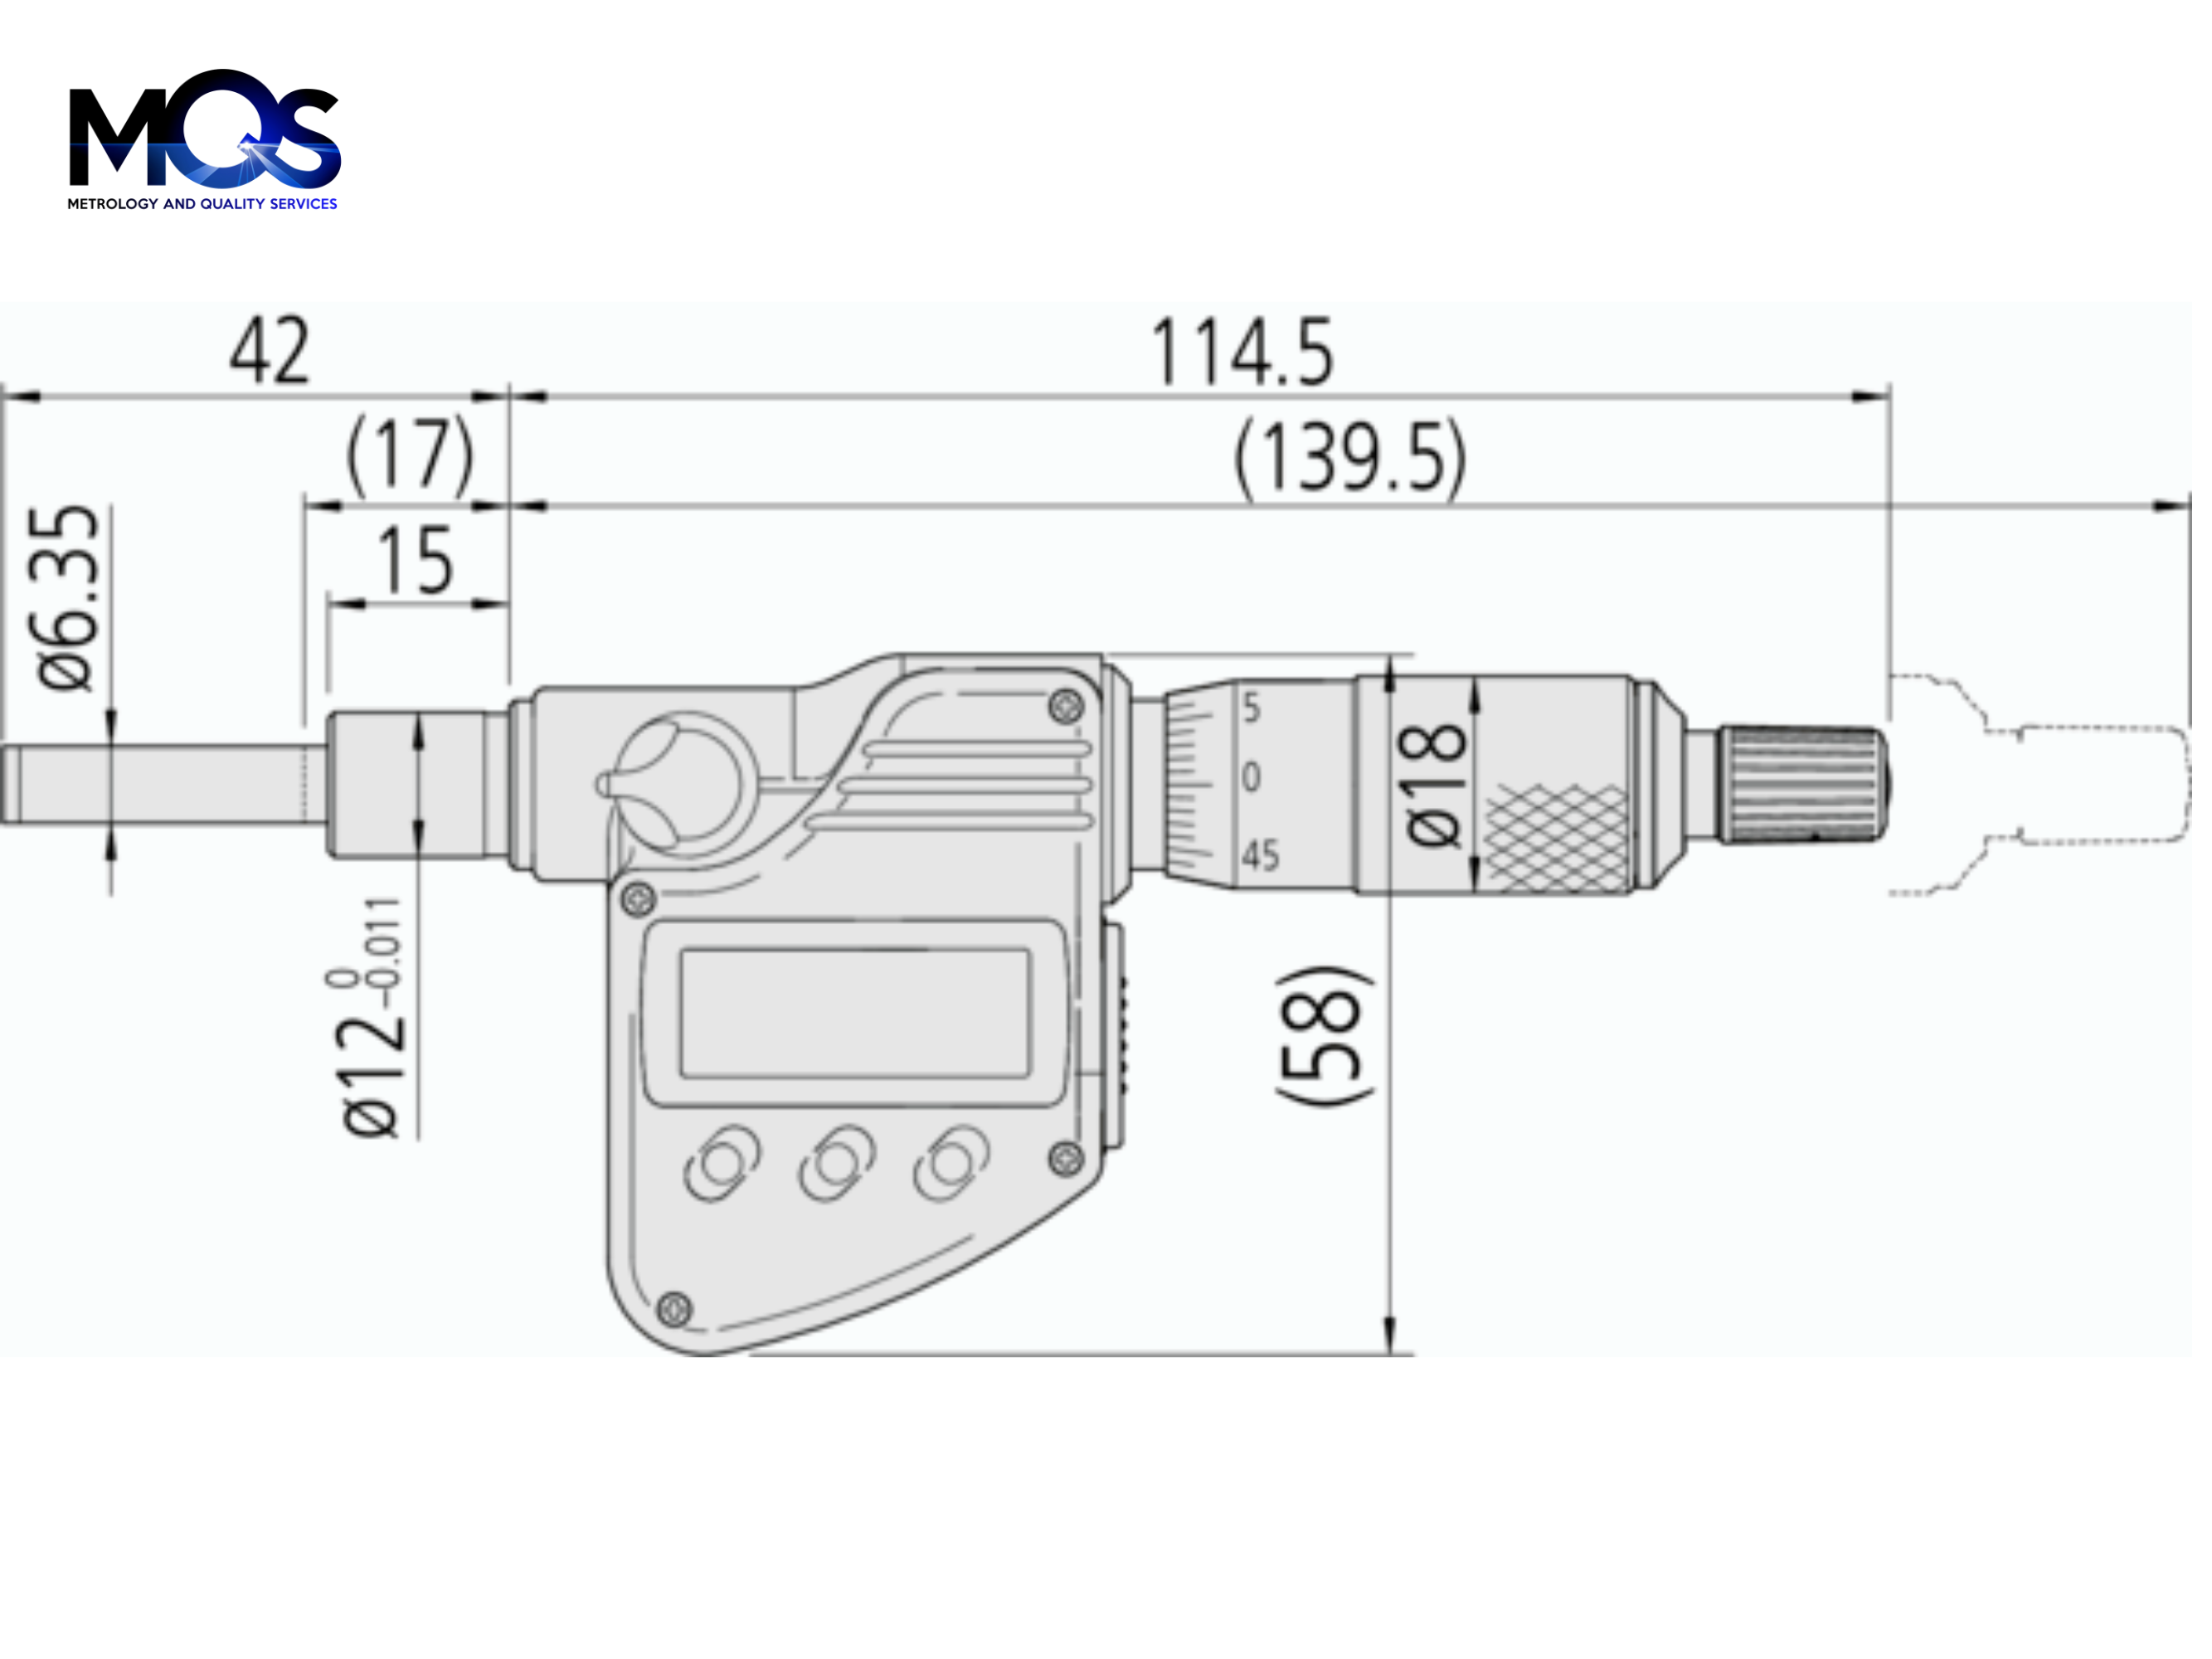 Digital Micrometer Head 0-25mm, Flat Spindle, 12mm Plain Stem 350-281-30